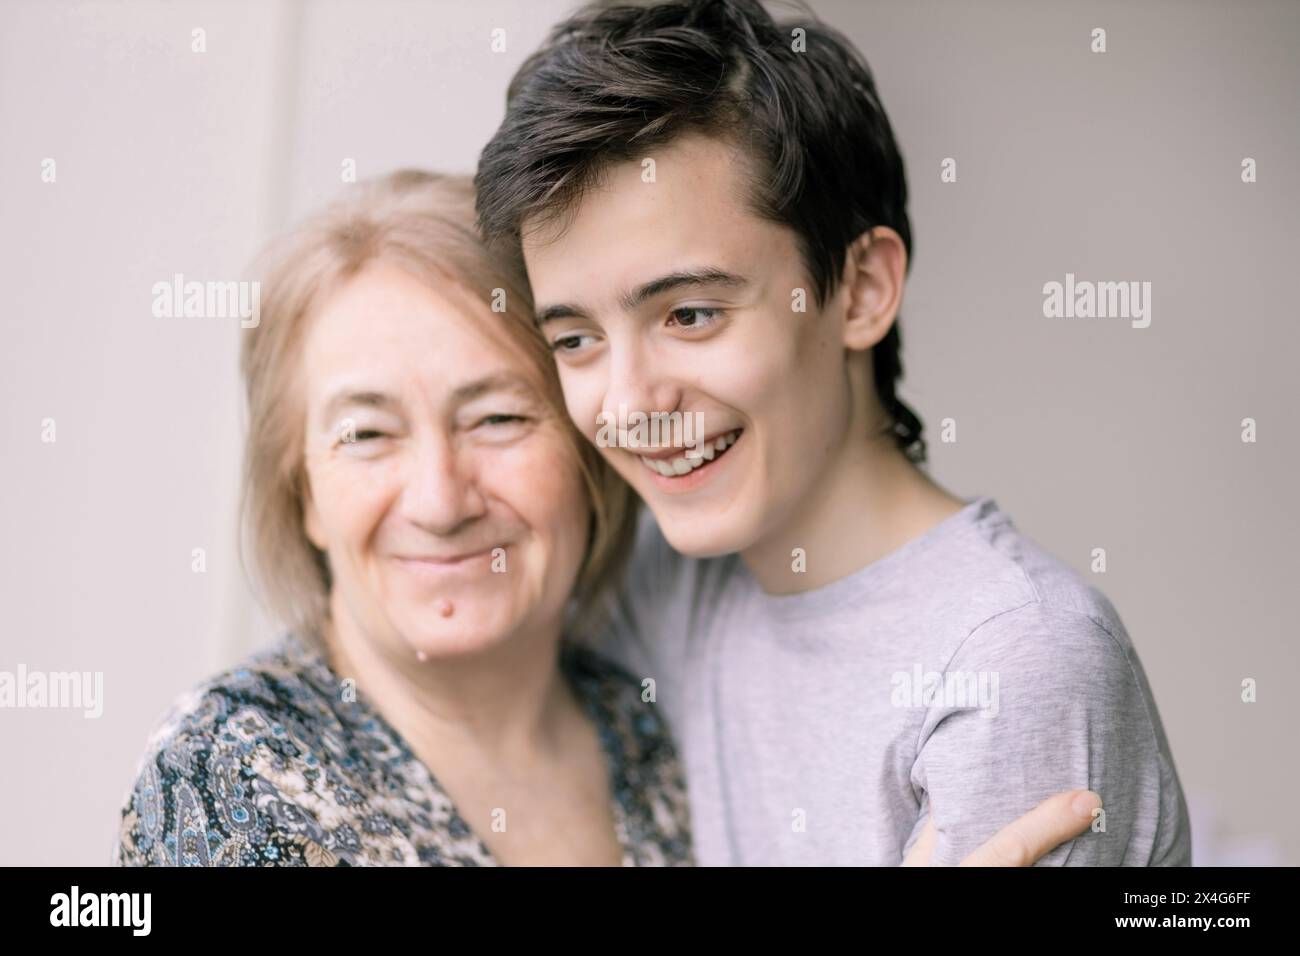 Senior woman with her grandson having fun Stock Photo